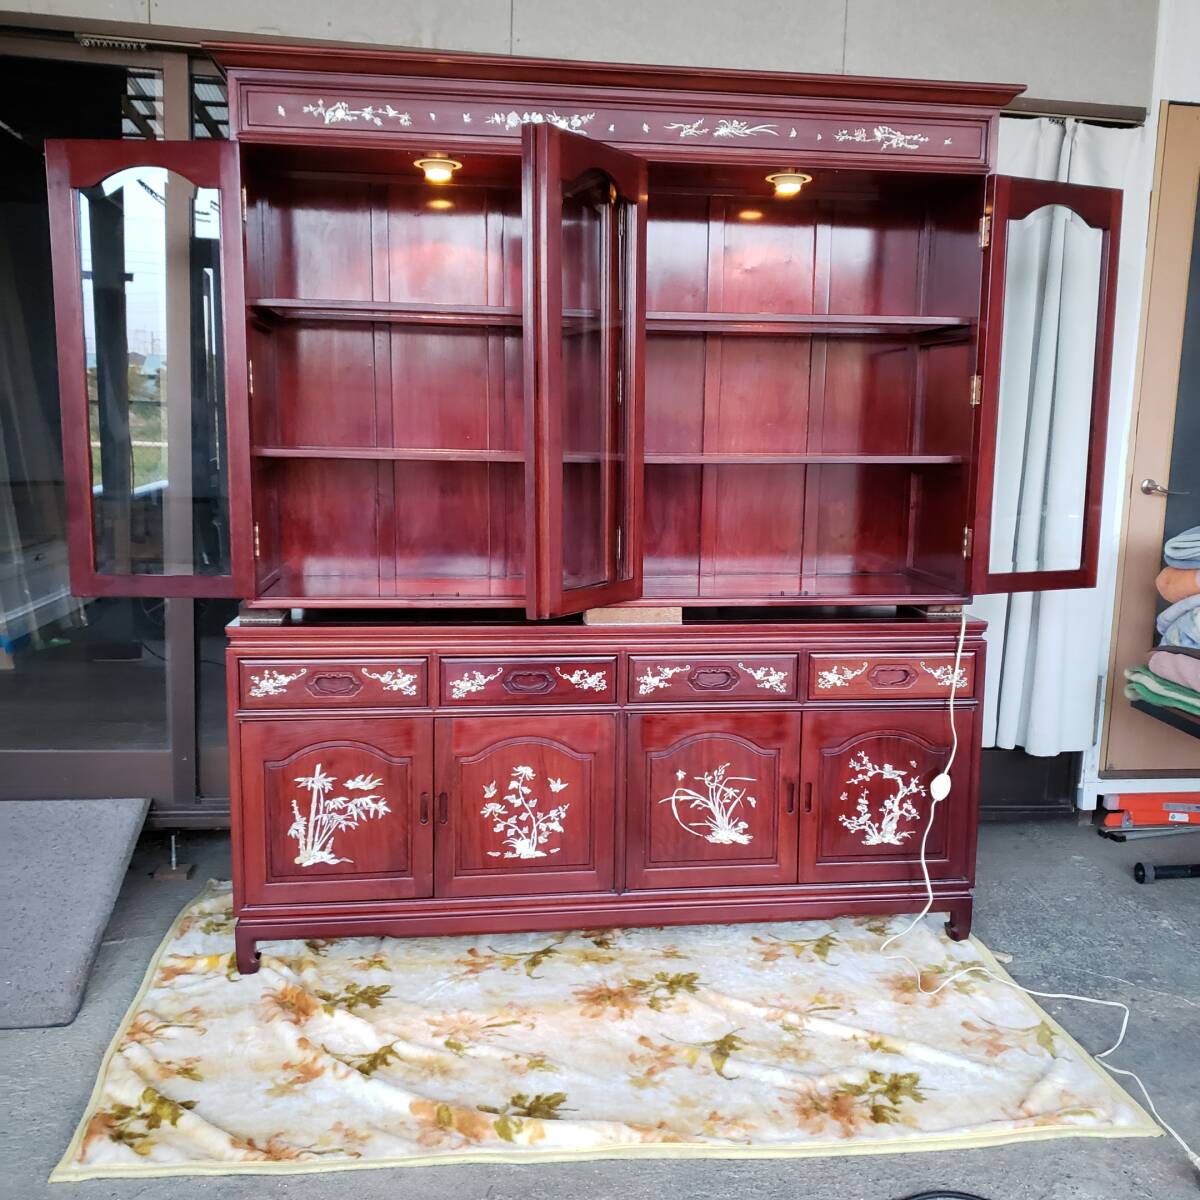 J-697 最高級 螺鈿細工 伝統工芸 唐木家具 花梨材 飾り棚 キャビネット カップボード 食器棚の画像1